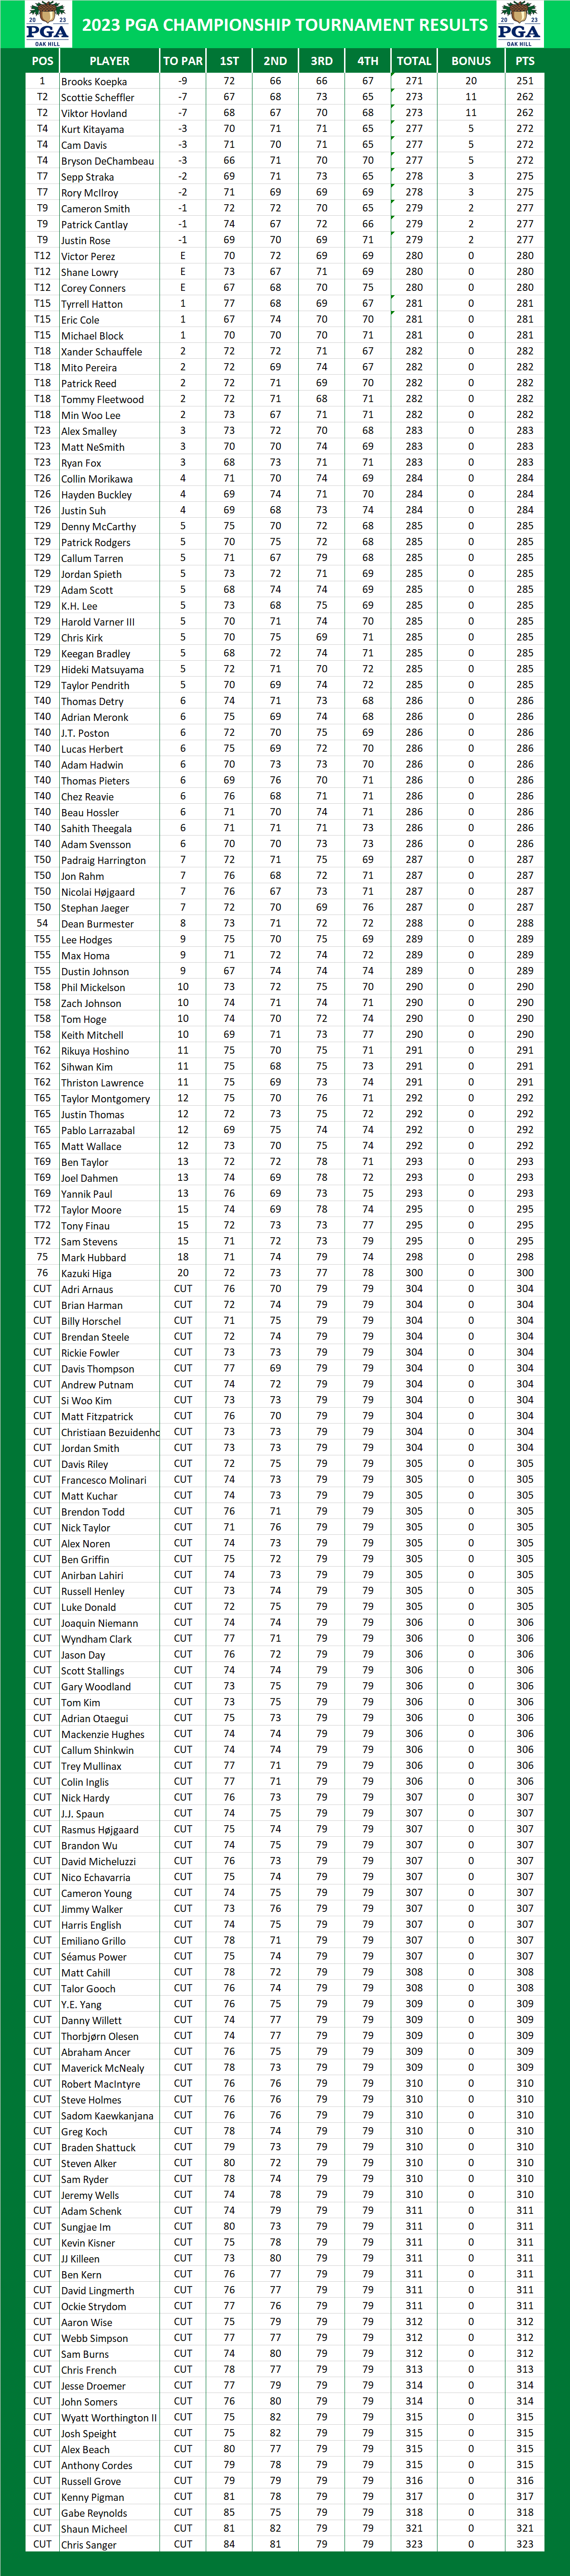 2023 PGA Championship Results